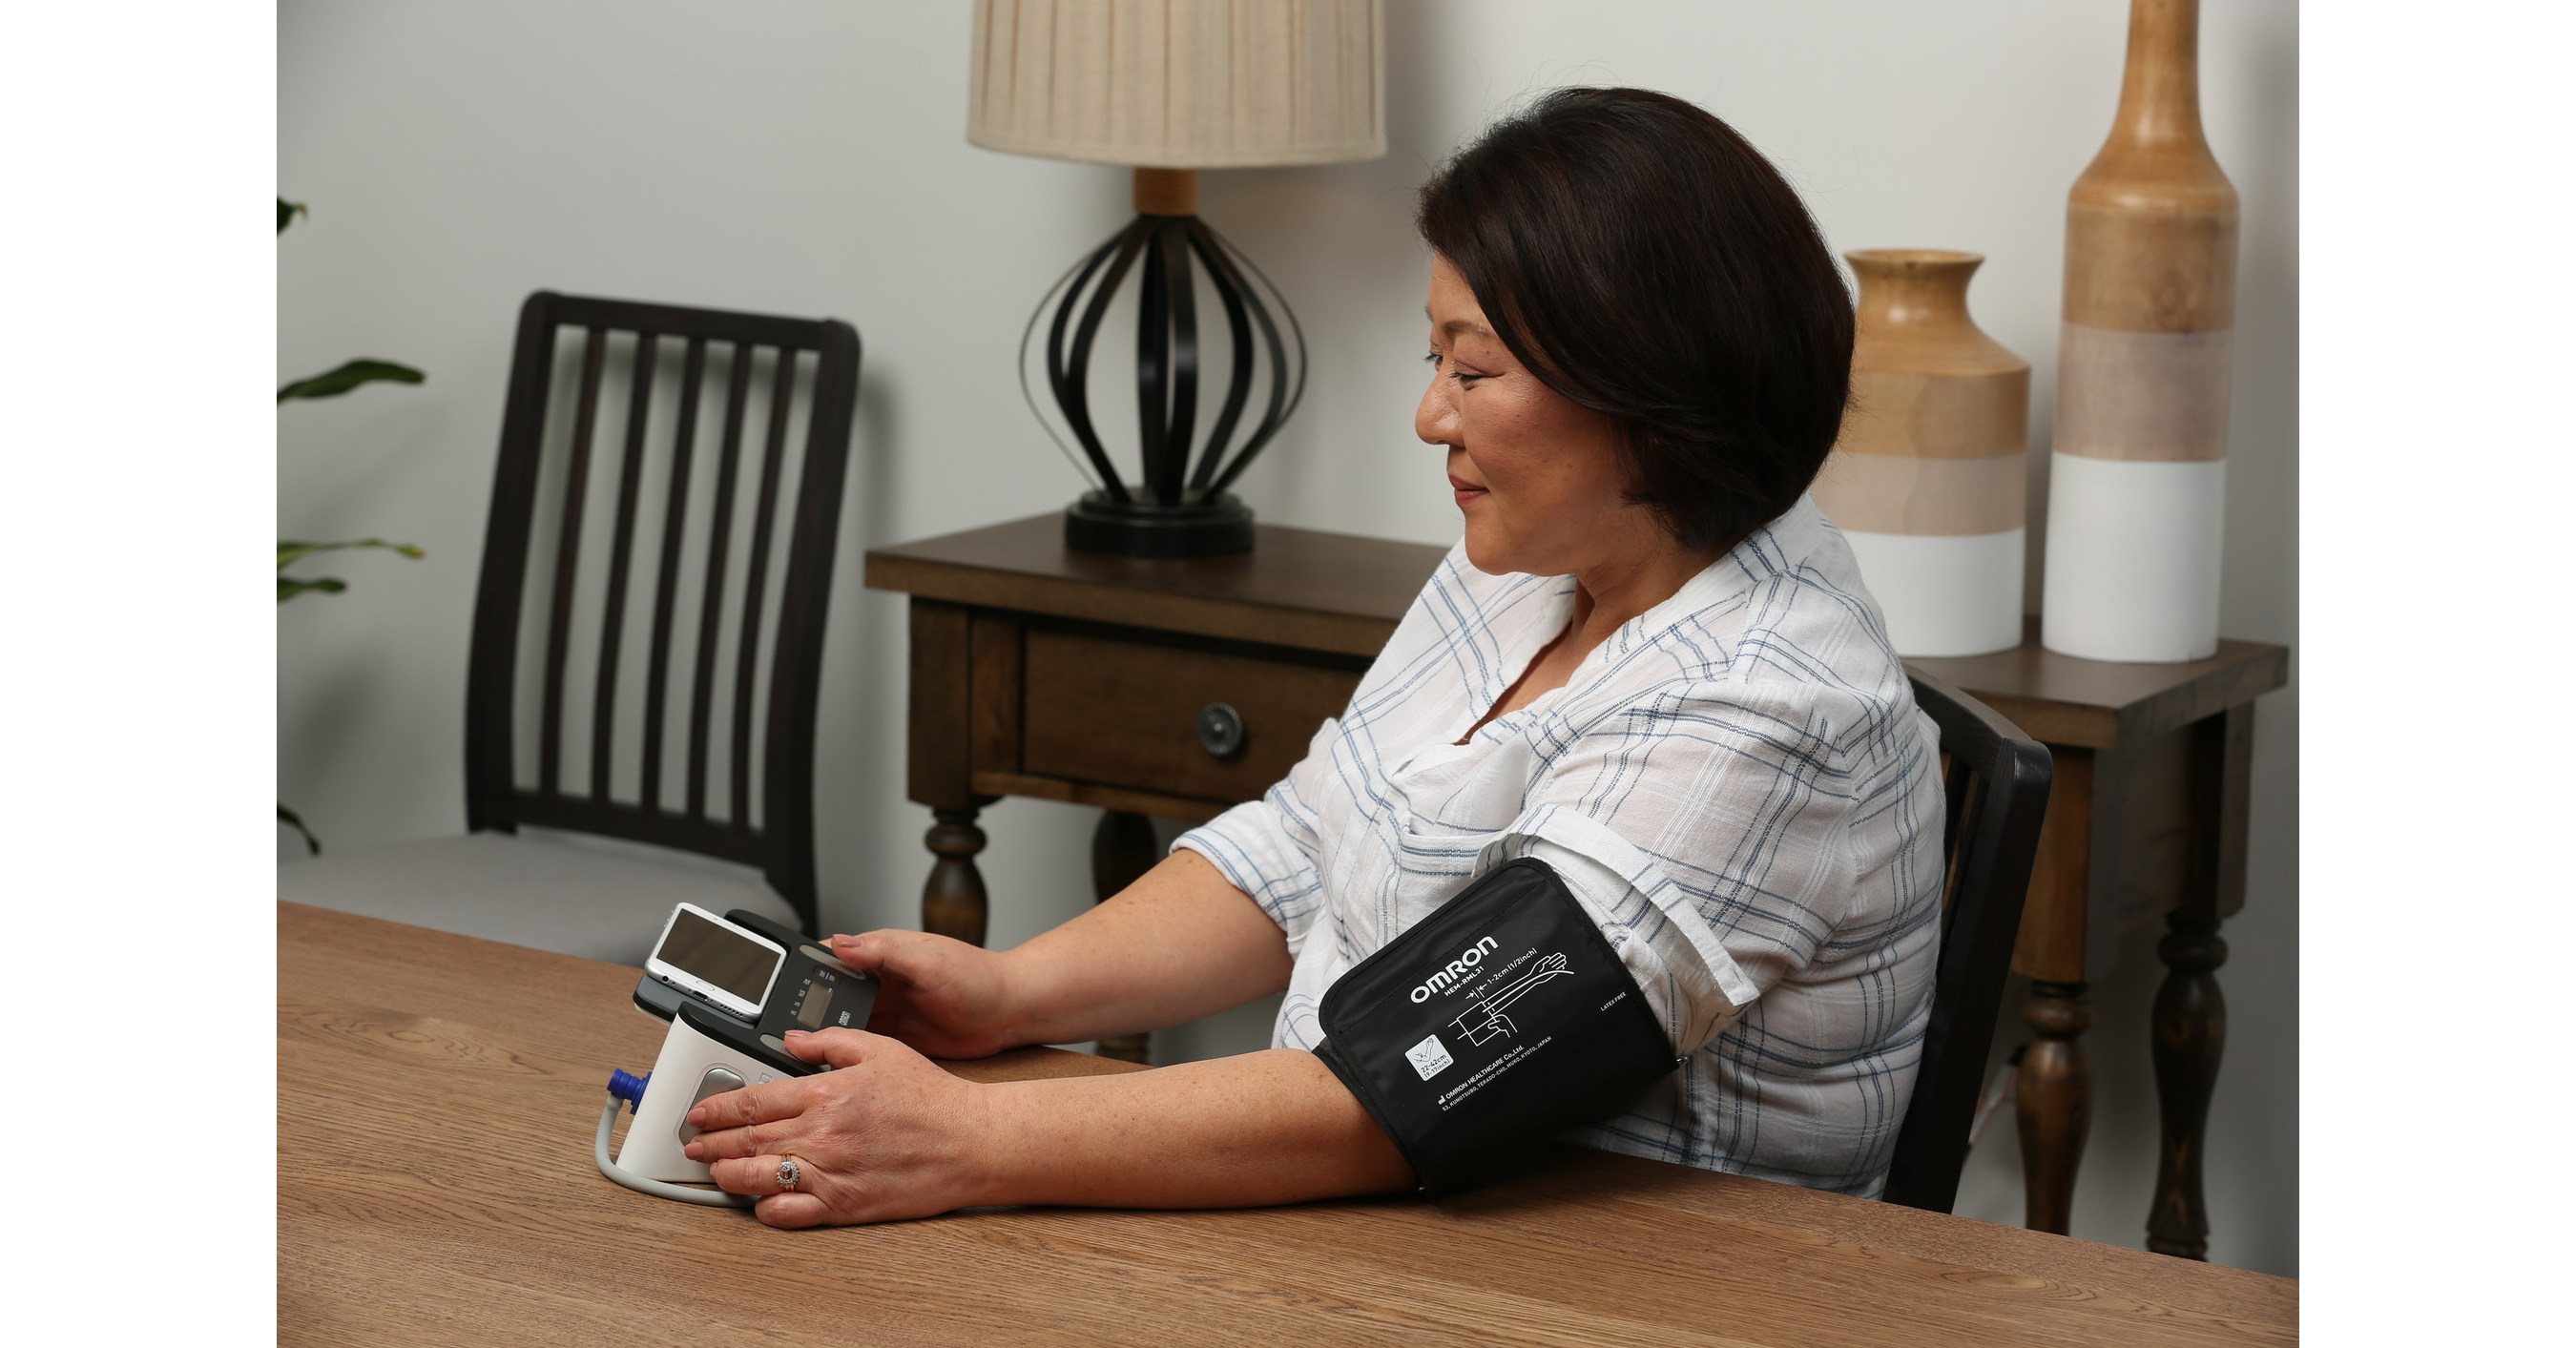 Omron Complete Blood Pressure and EKG Monitor